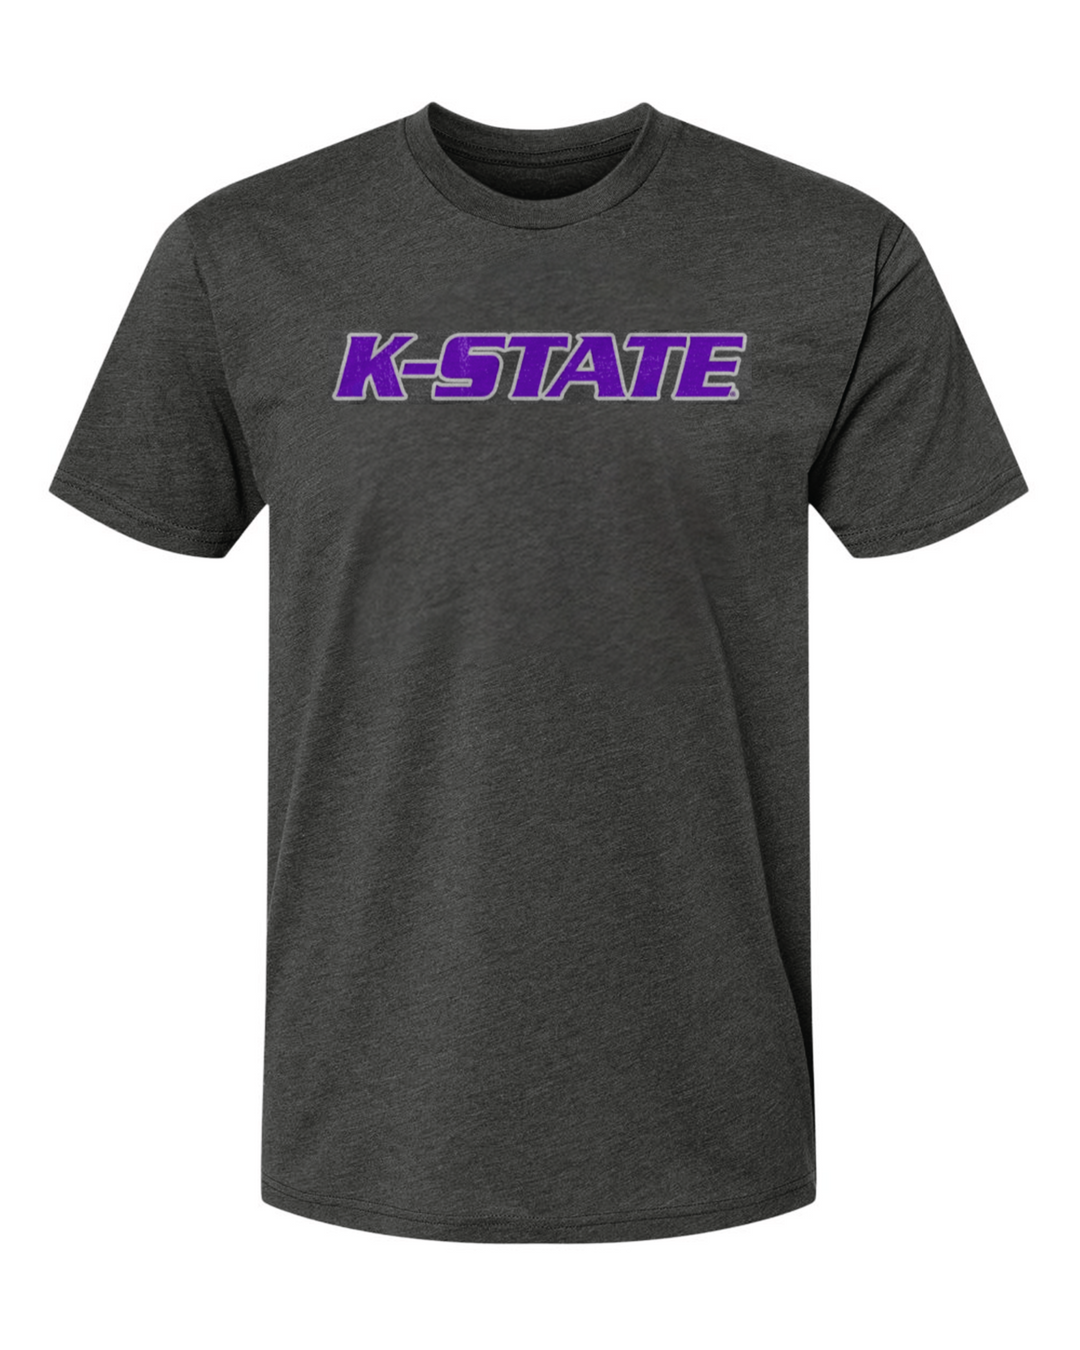 Mock up of Kansas State K-State Shirt from Nudge Printing